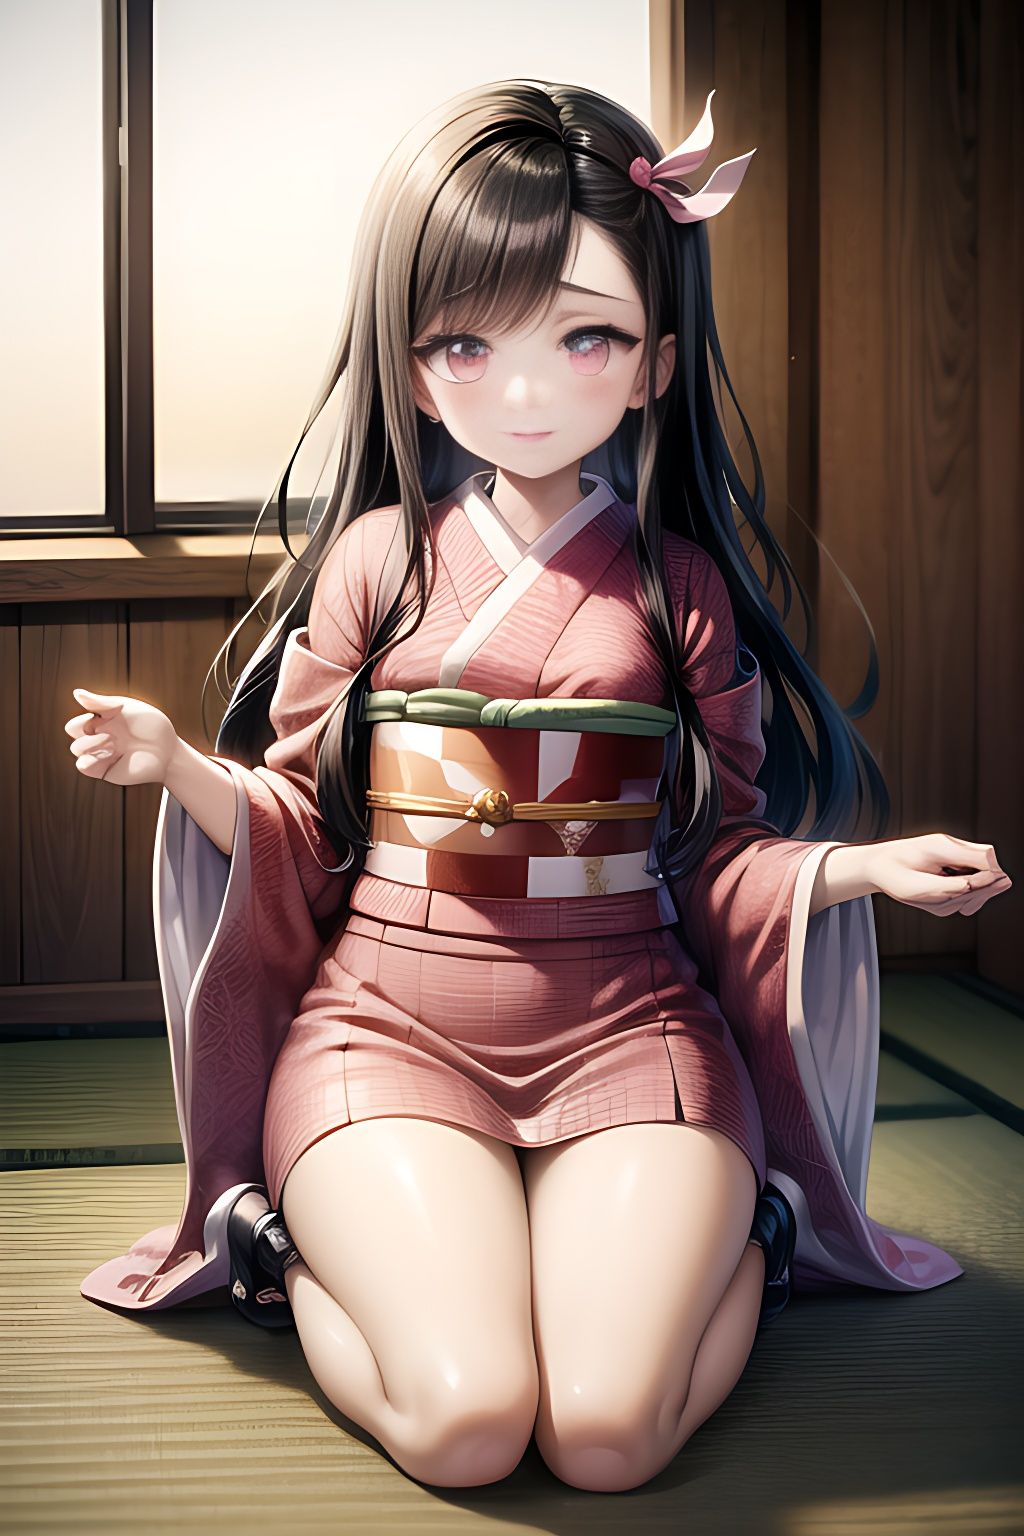 an anime kimono girl kneeling down